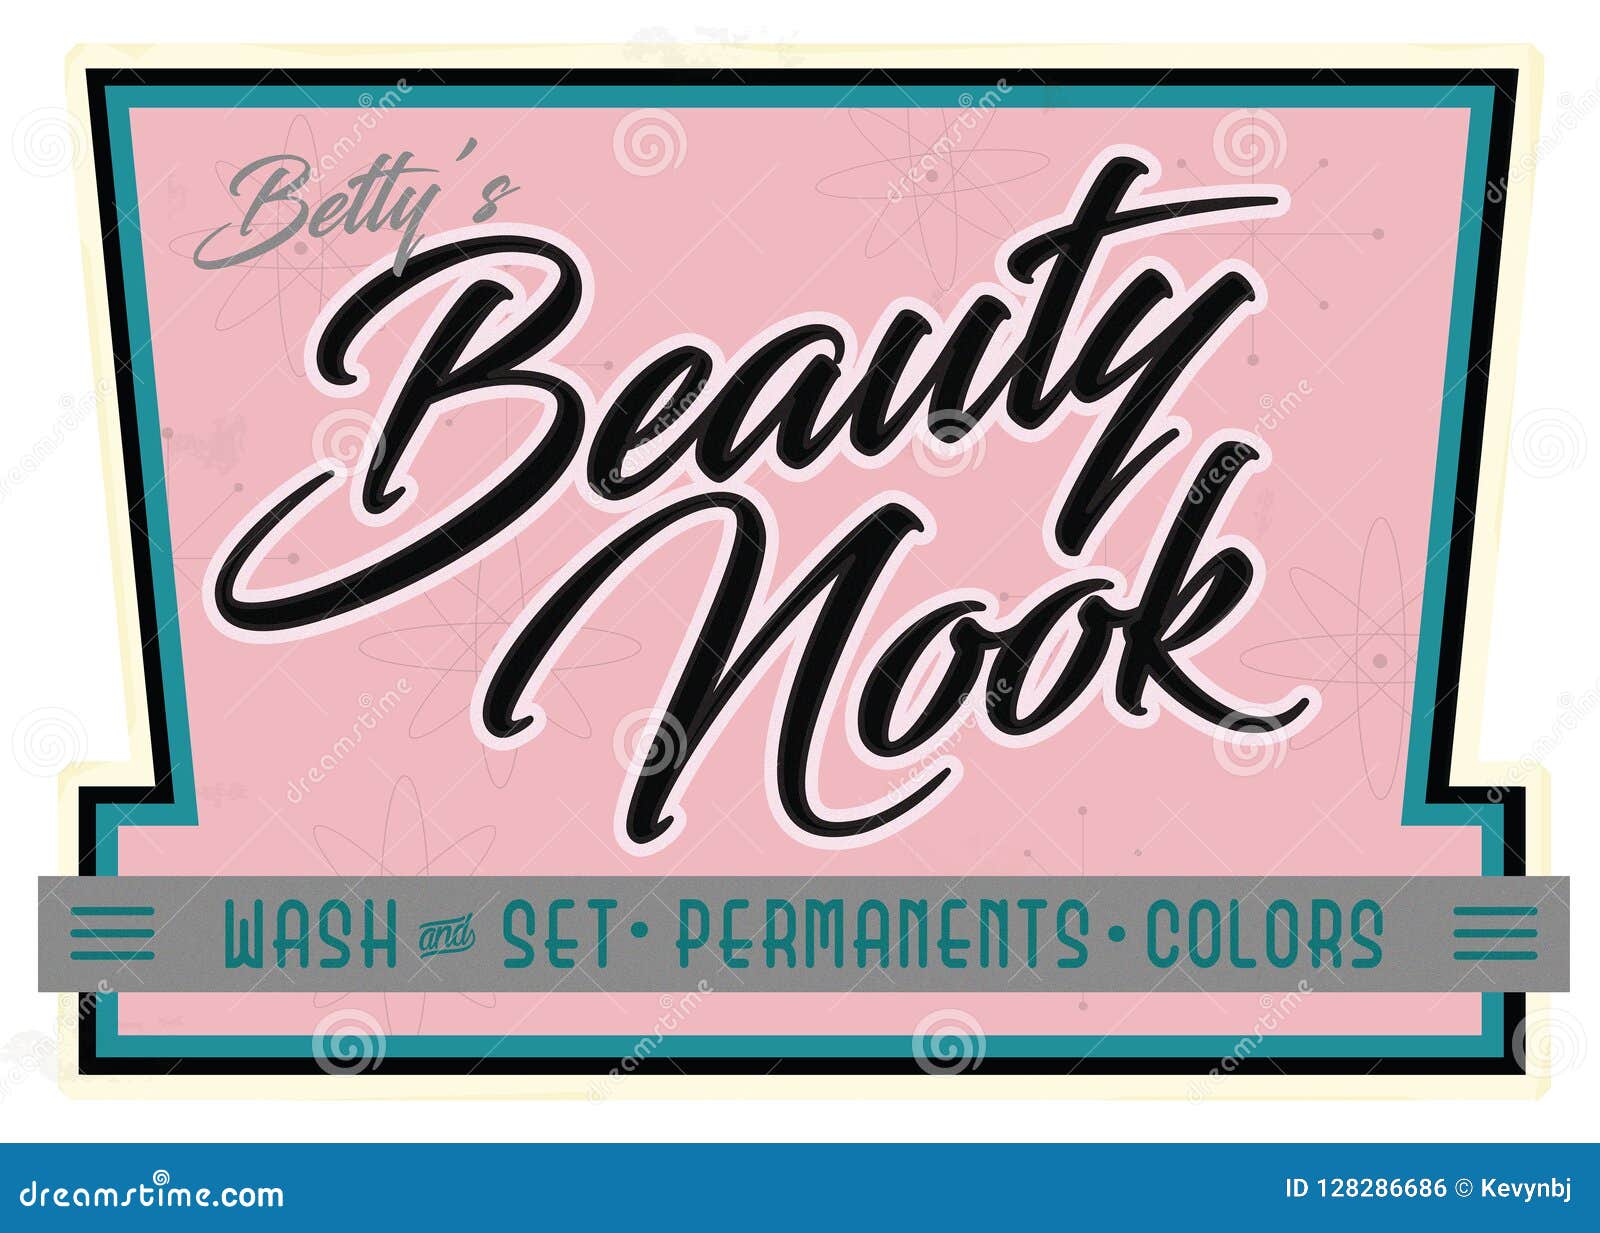 retro beauty salon nook parlor sign advertisement